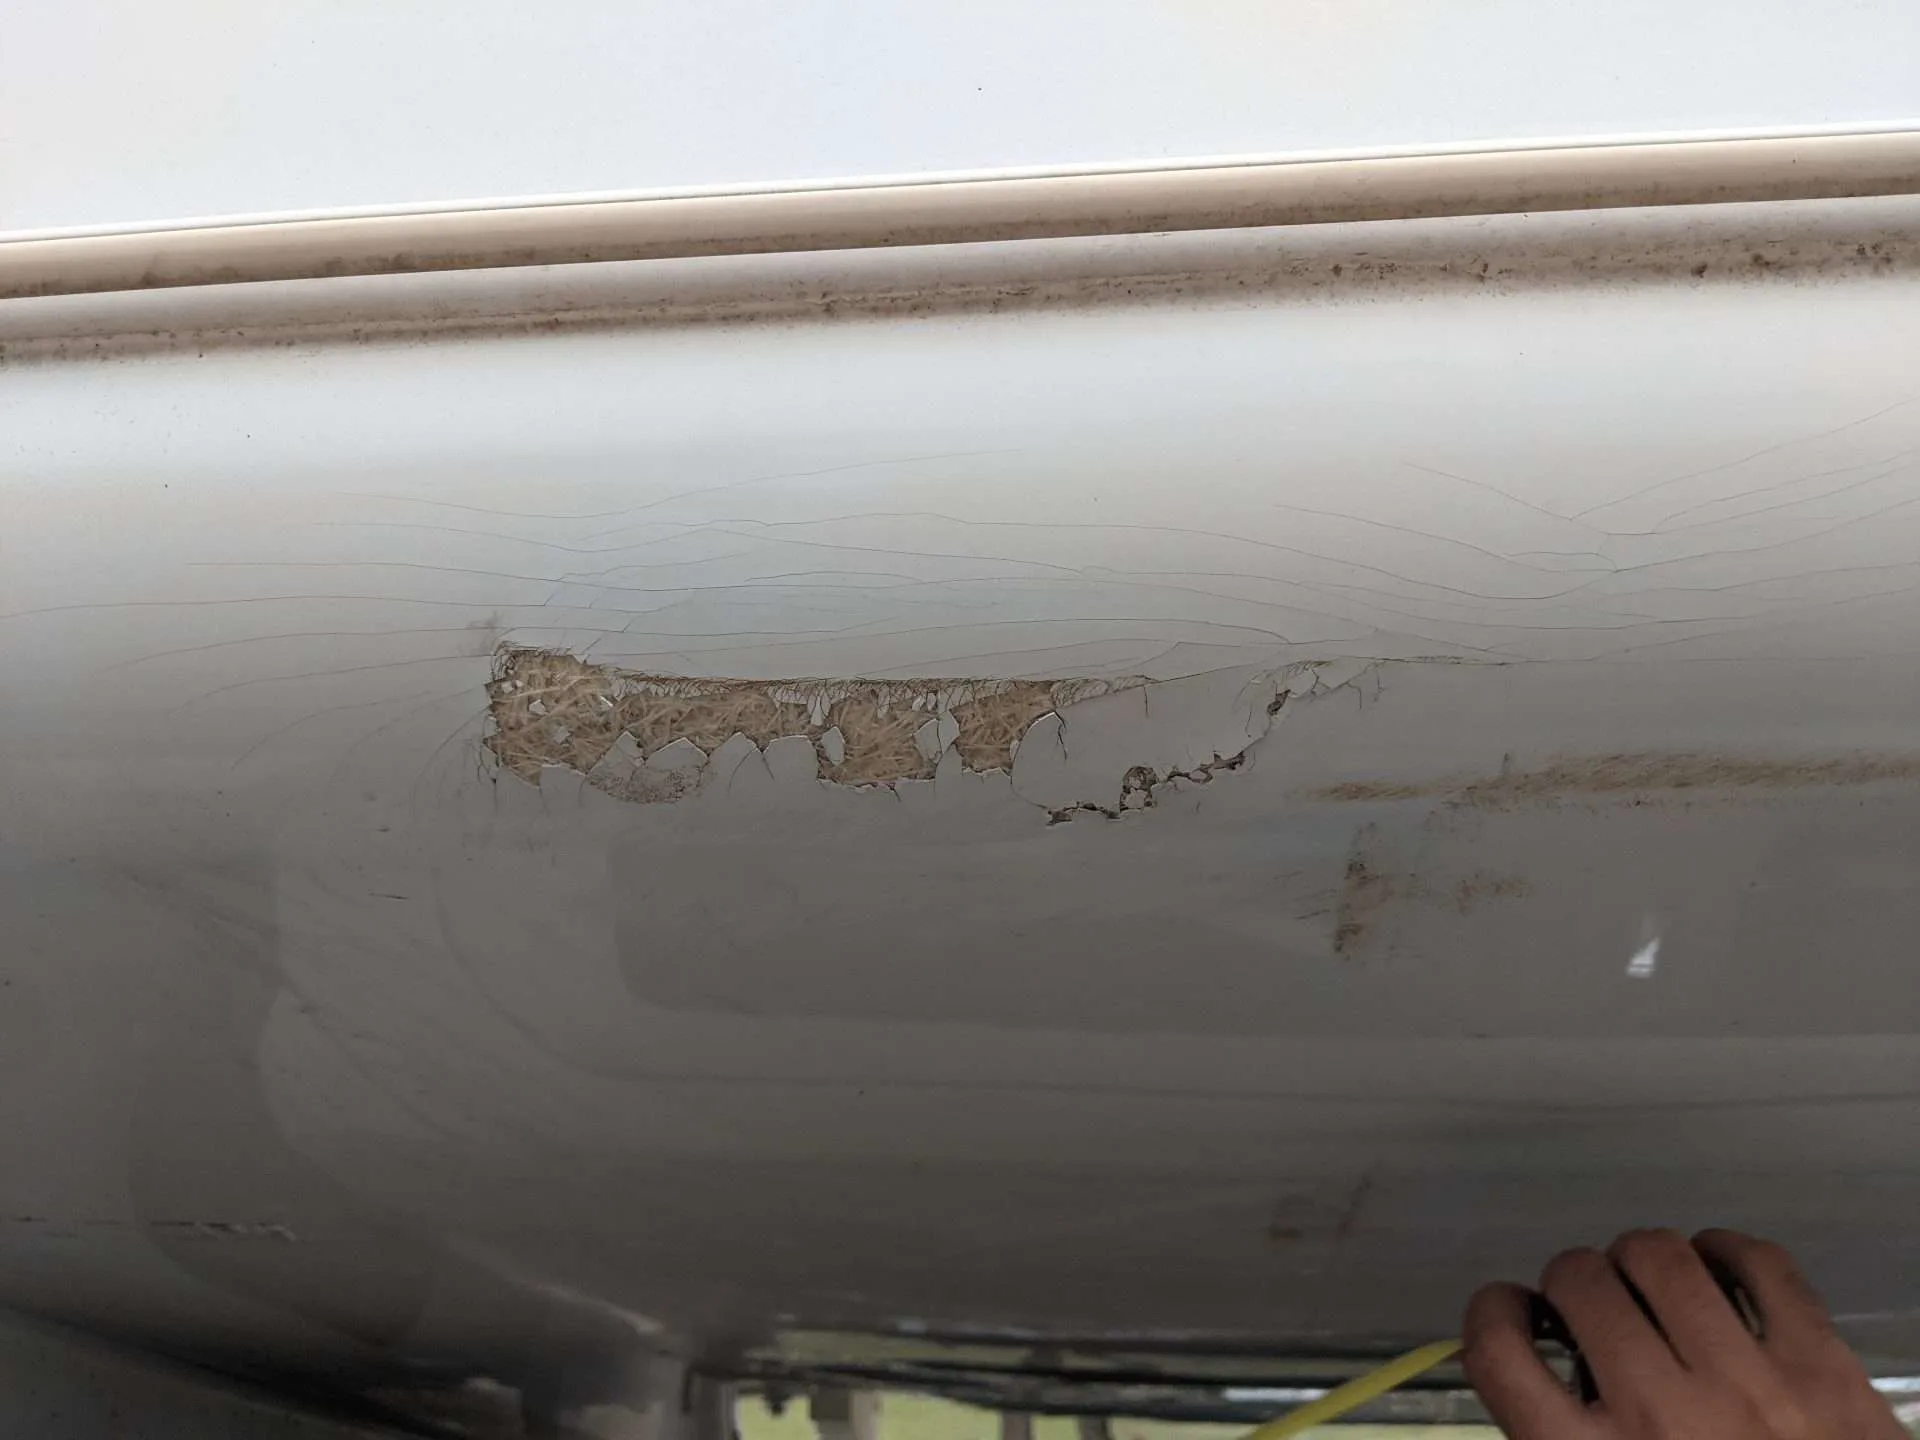 RV exterior damage